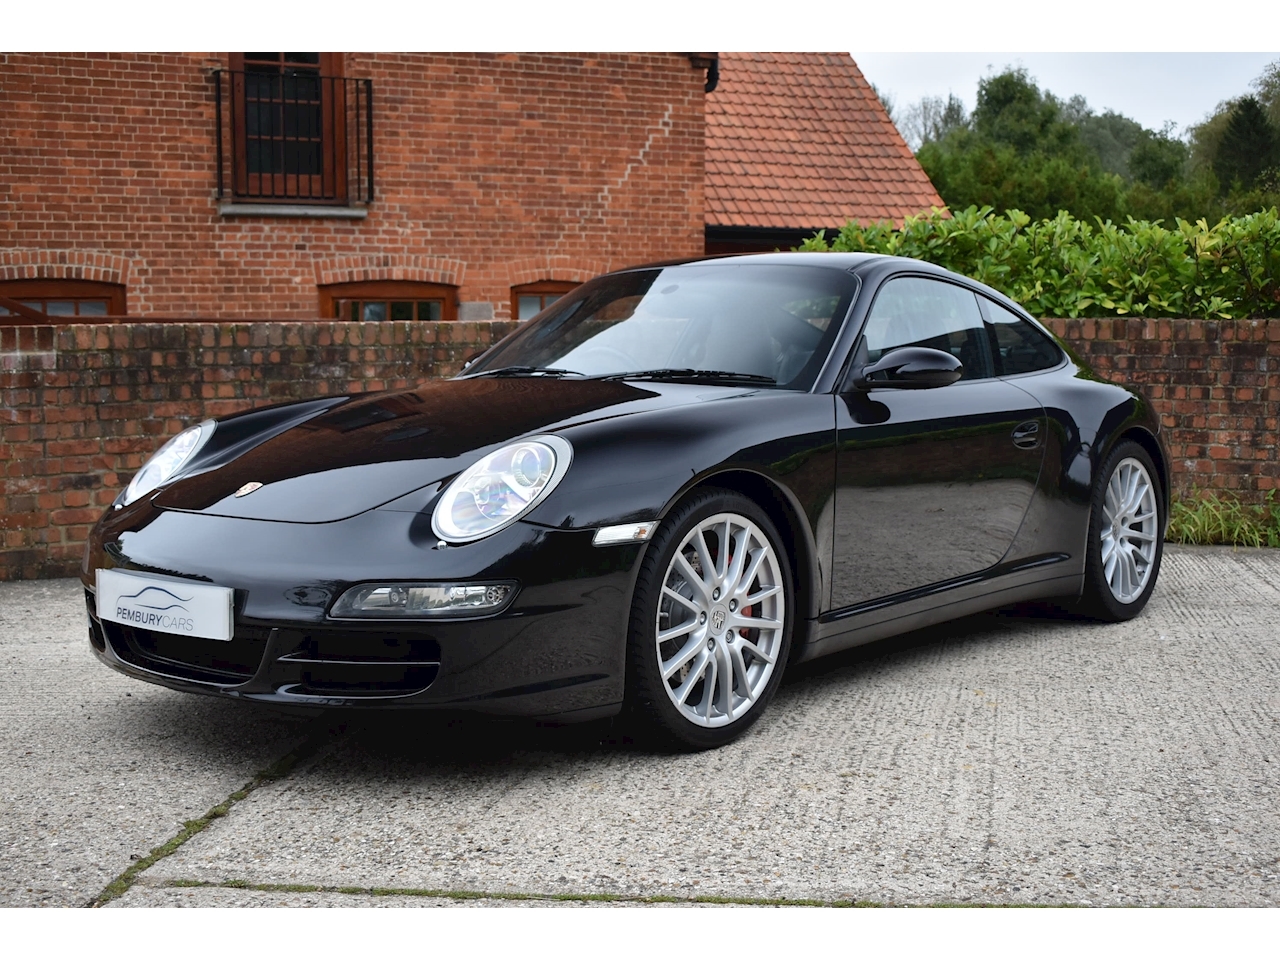 Used 2006 Porsche 911 997 Carrera 4s For Sale U1002 Pembury Cars